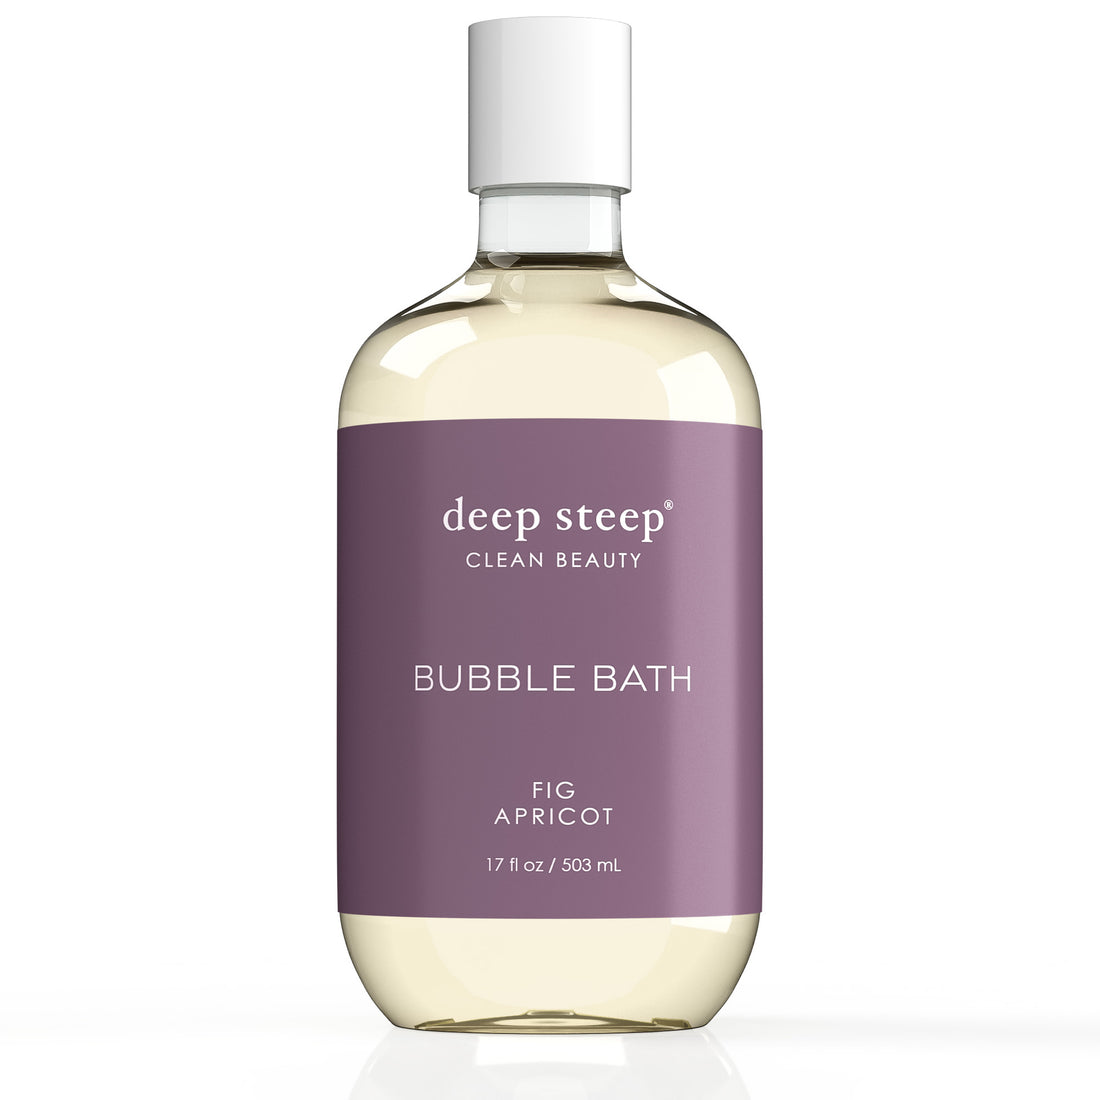 Bubble Bath - Fig Apricot